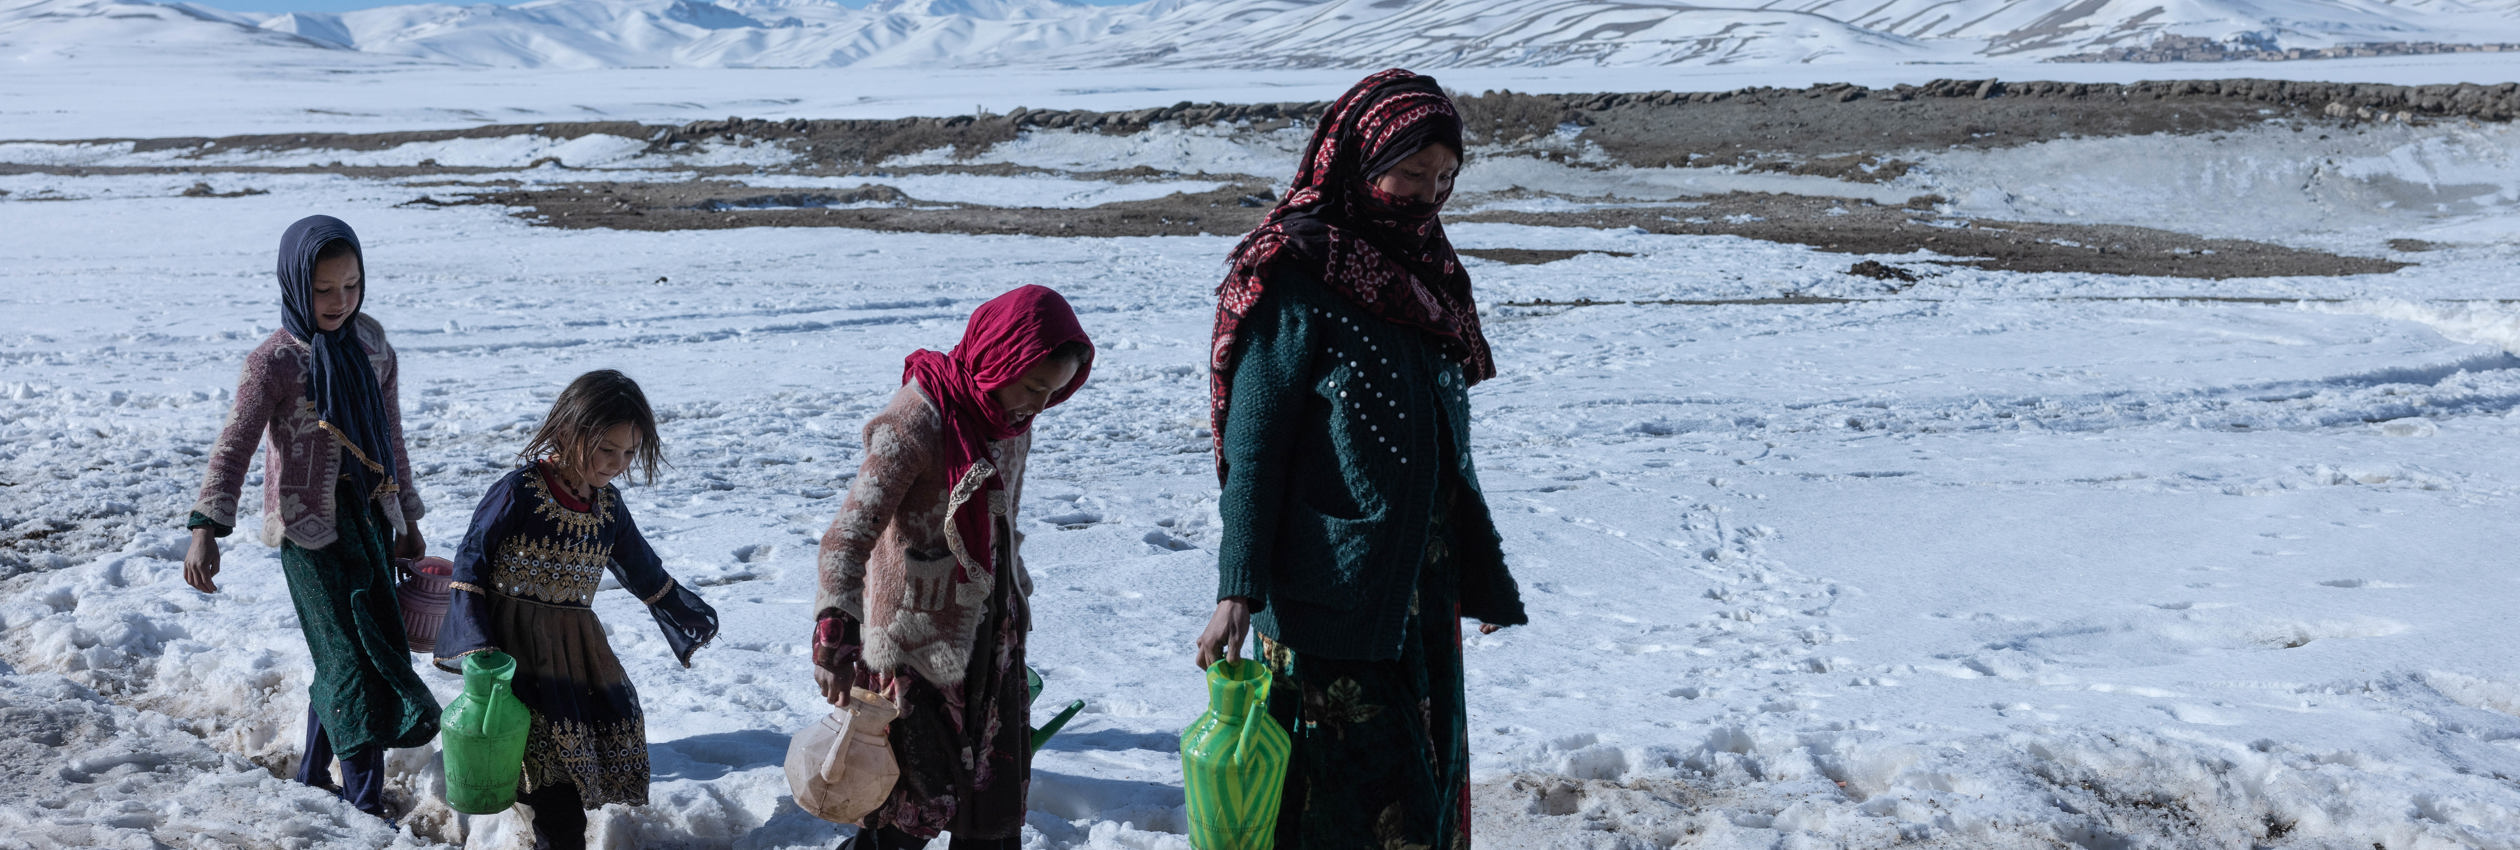 Afghanistan. Winterization In Bamyan Province